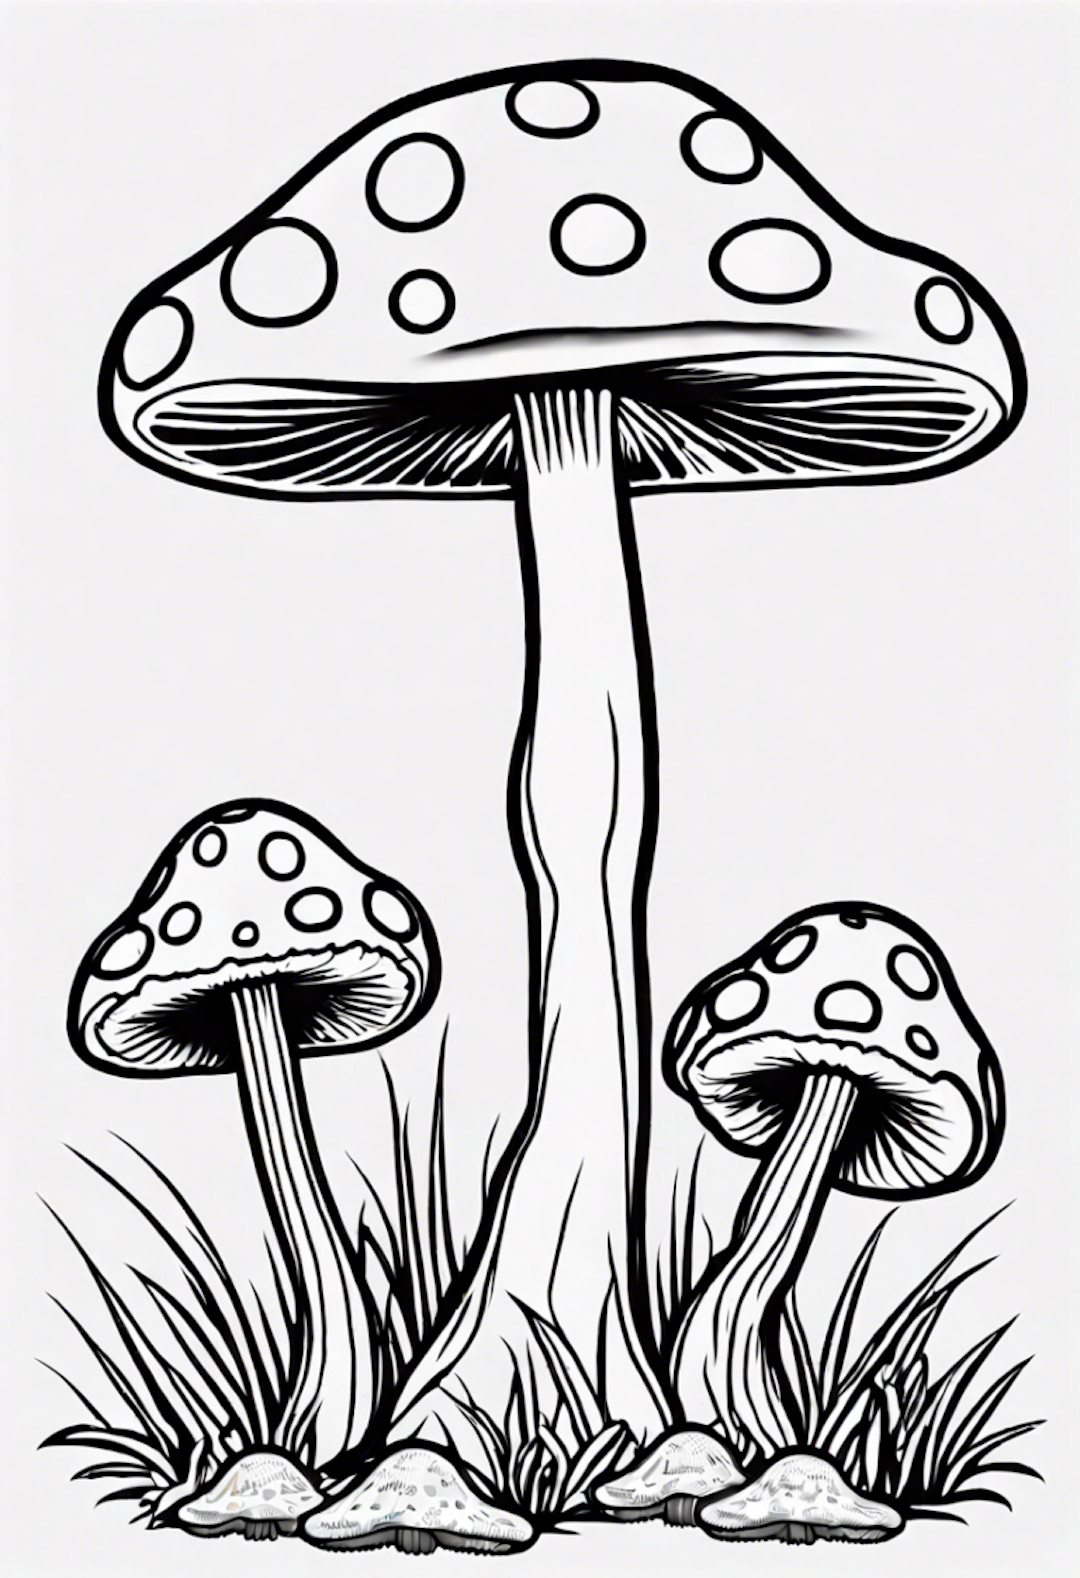 Magical Mushroom Wonderland coloring pages